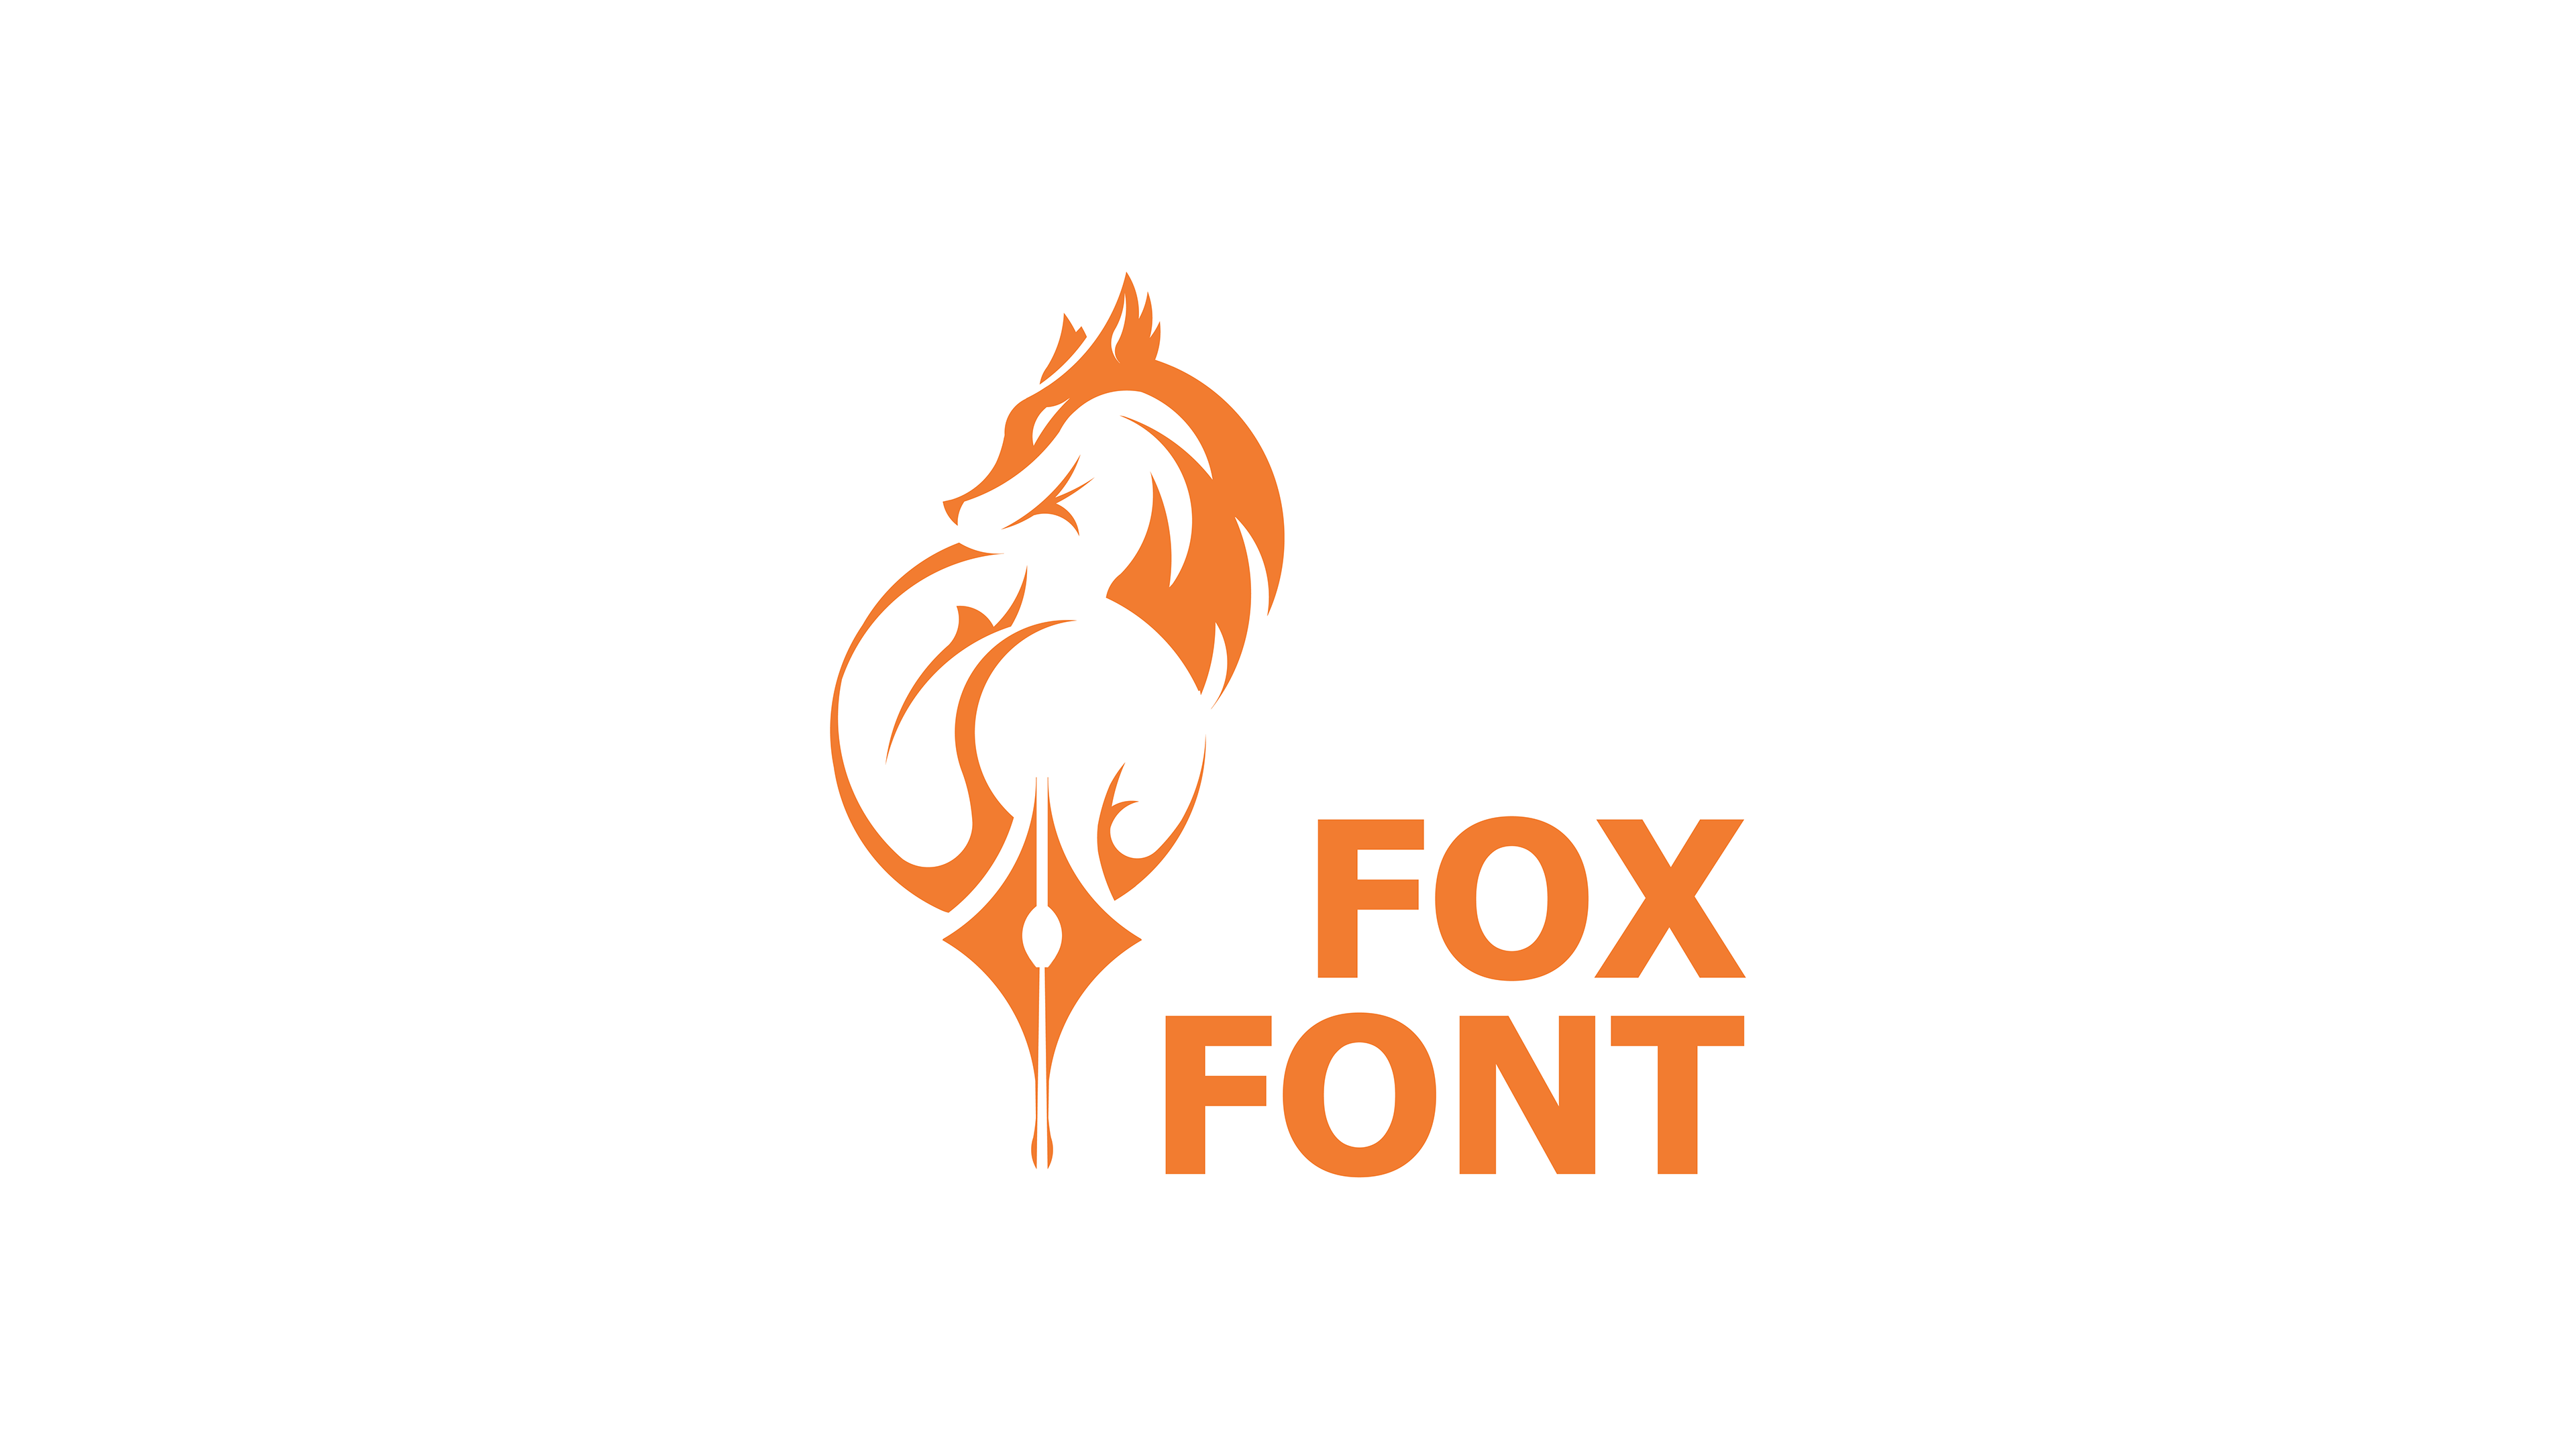 Fox fonts